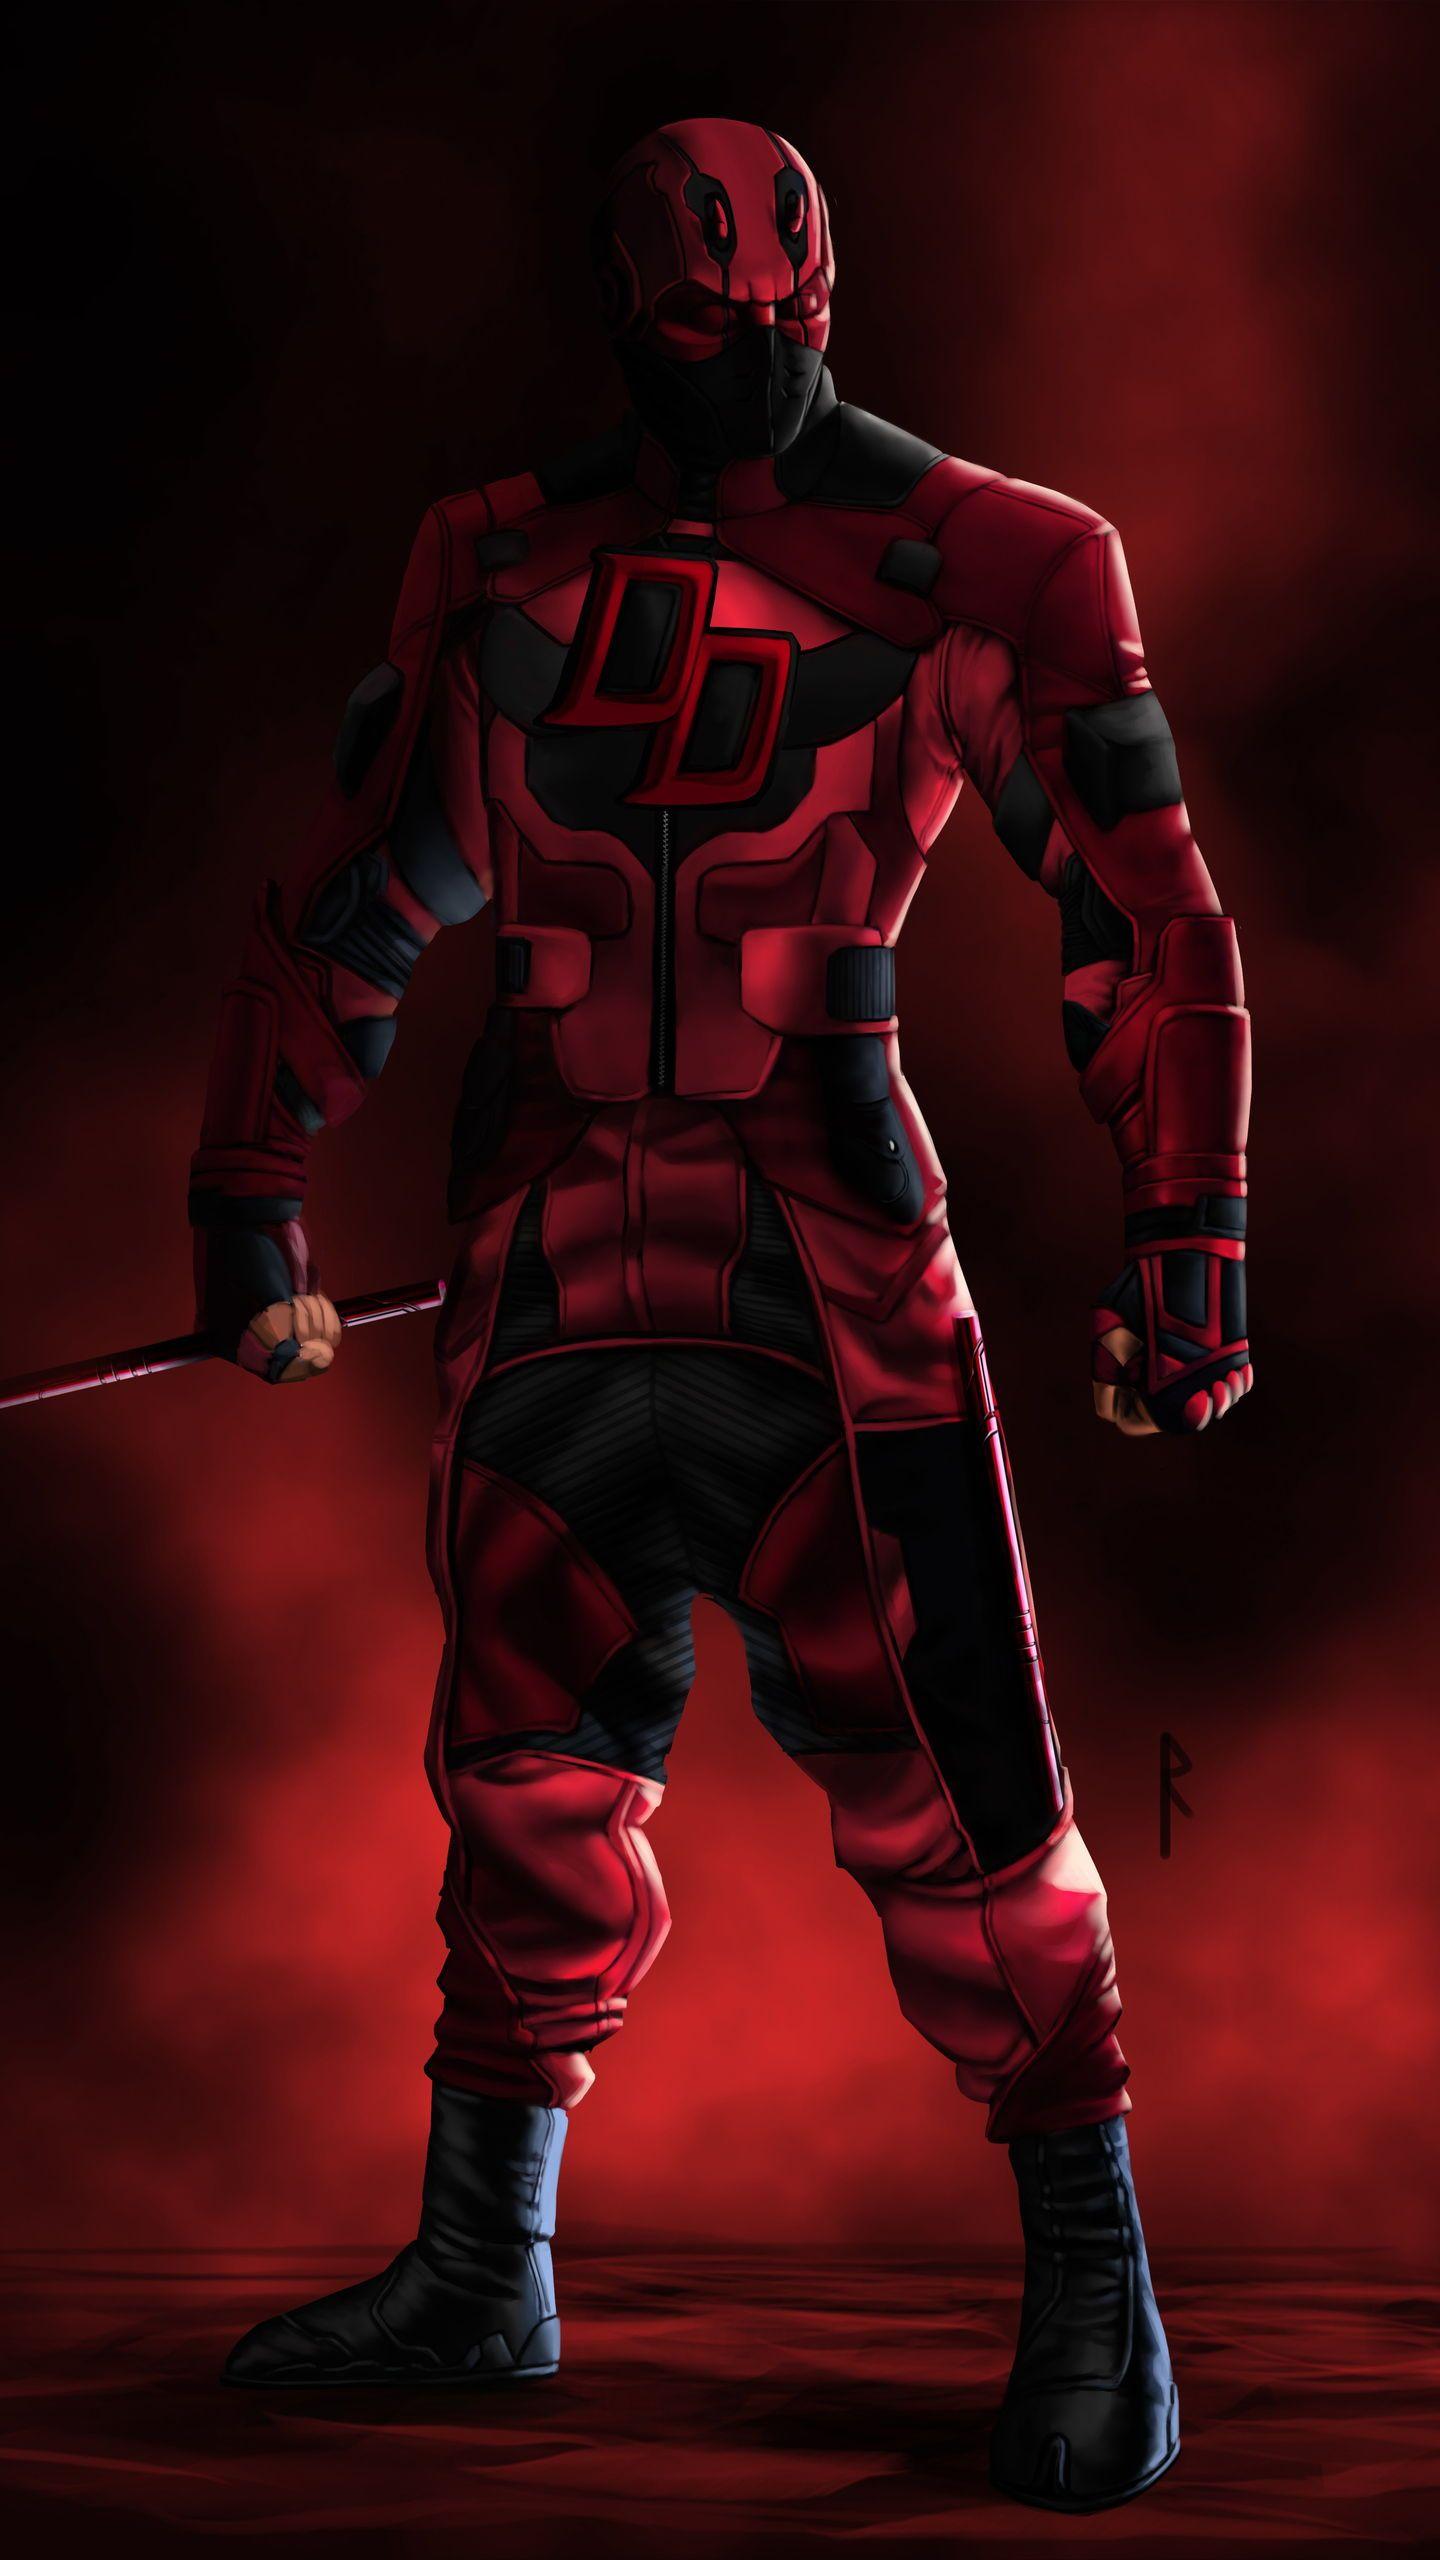 Daredevil Wallpaper. Netflix, Marvel. #wallpaper #poster #netflix # daredevil #iphone #red #save. Daredevil artwork, Superhero, Daredevil